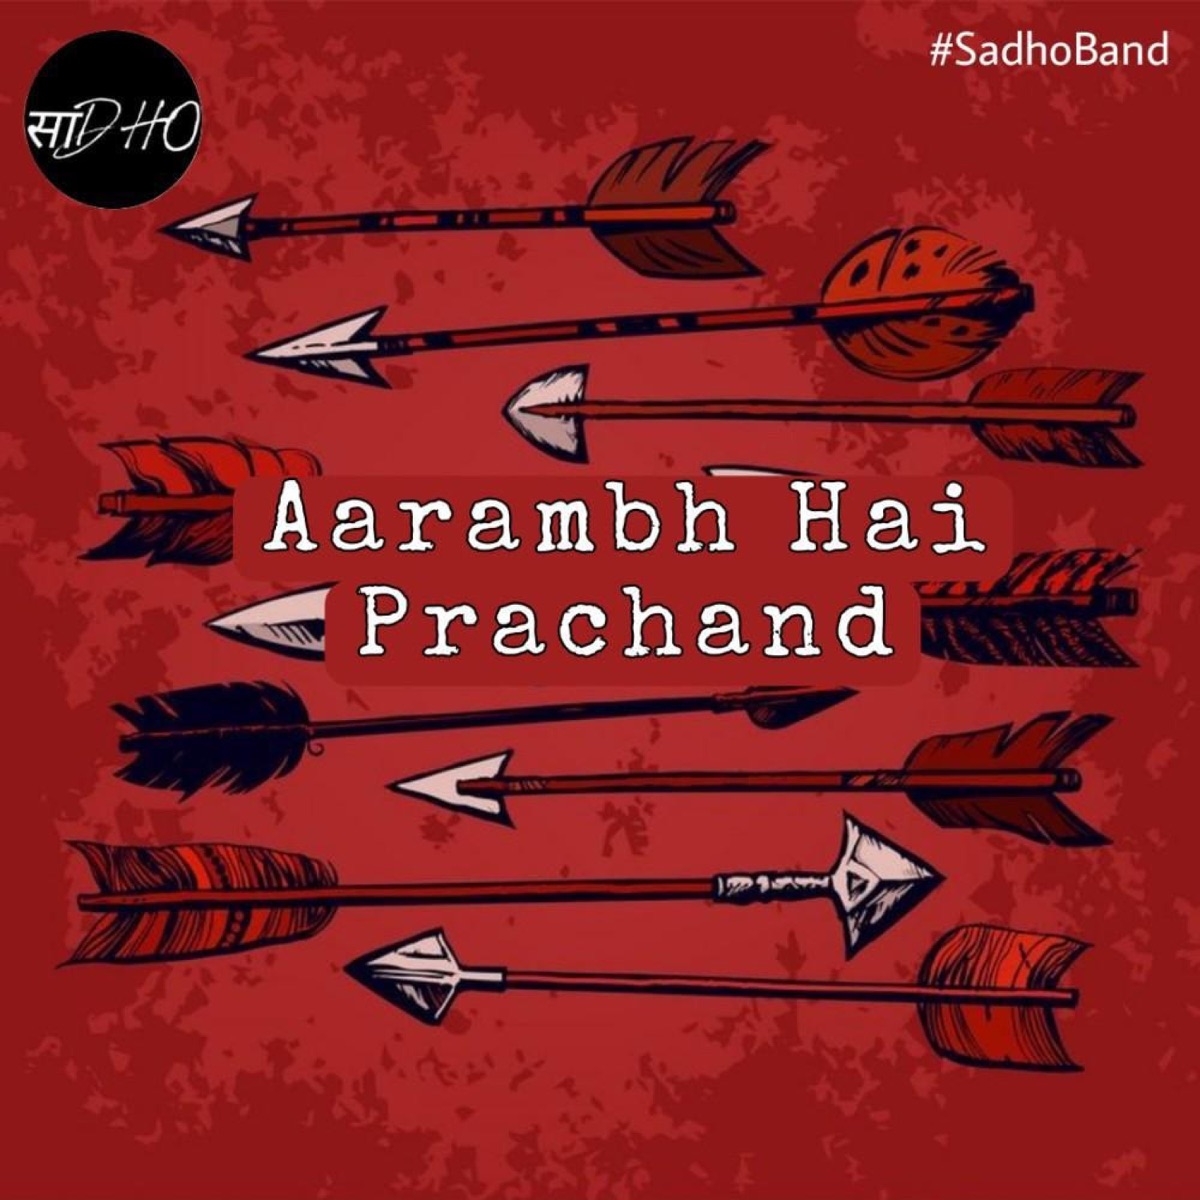 Download Arambh hai prachand by peeyush rathore channel mp3 free and mp4